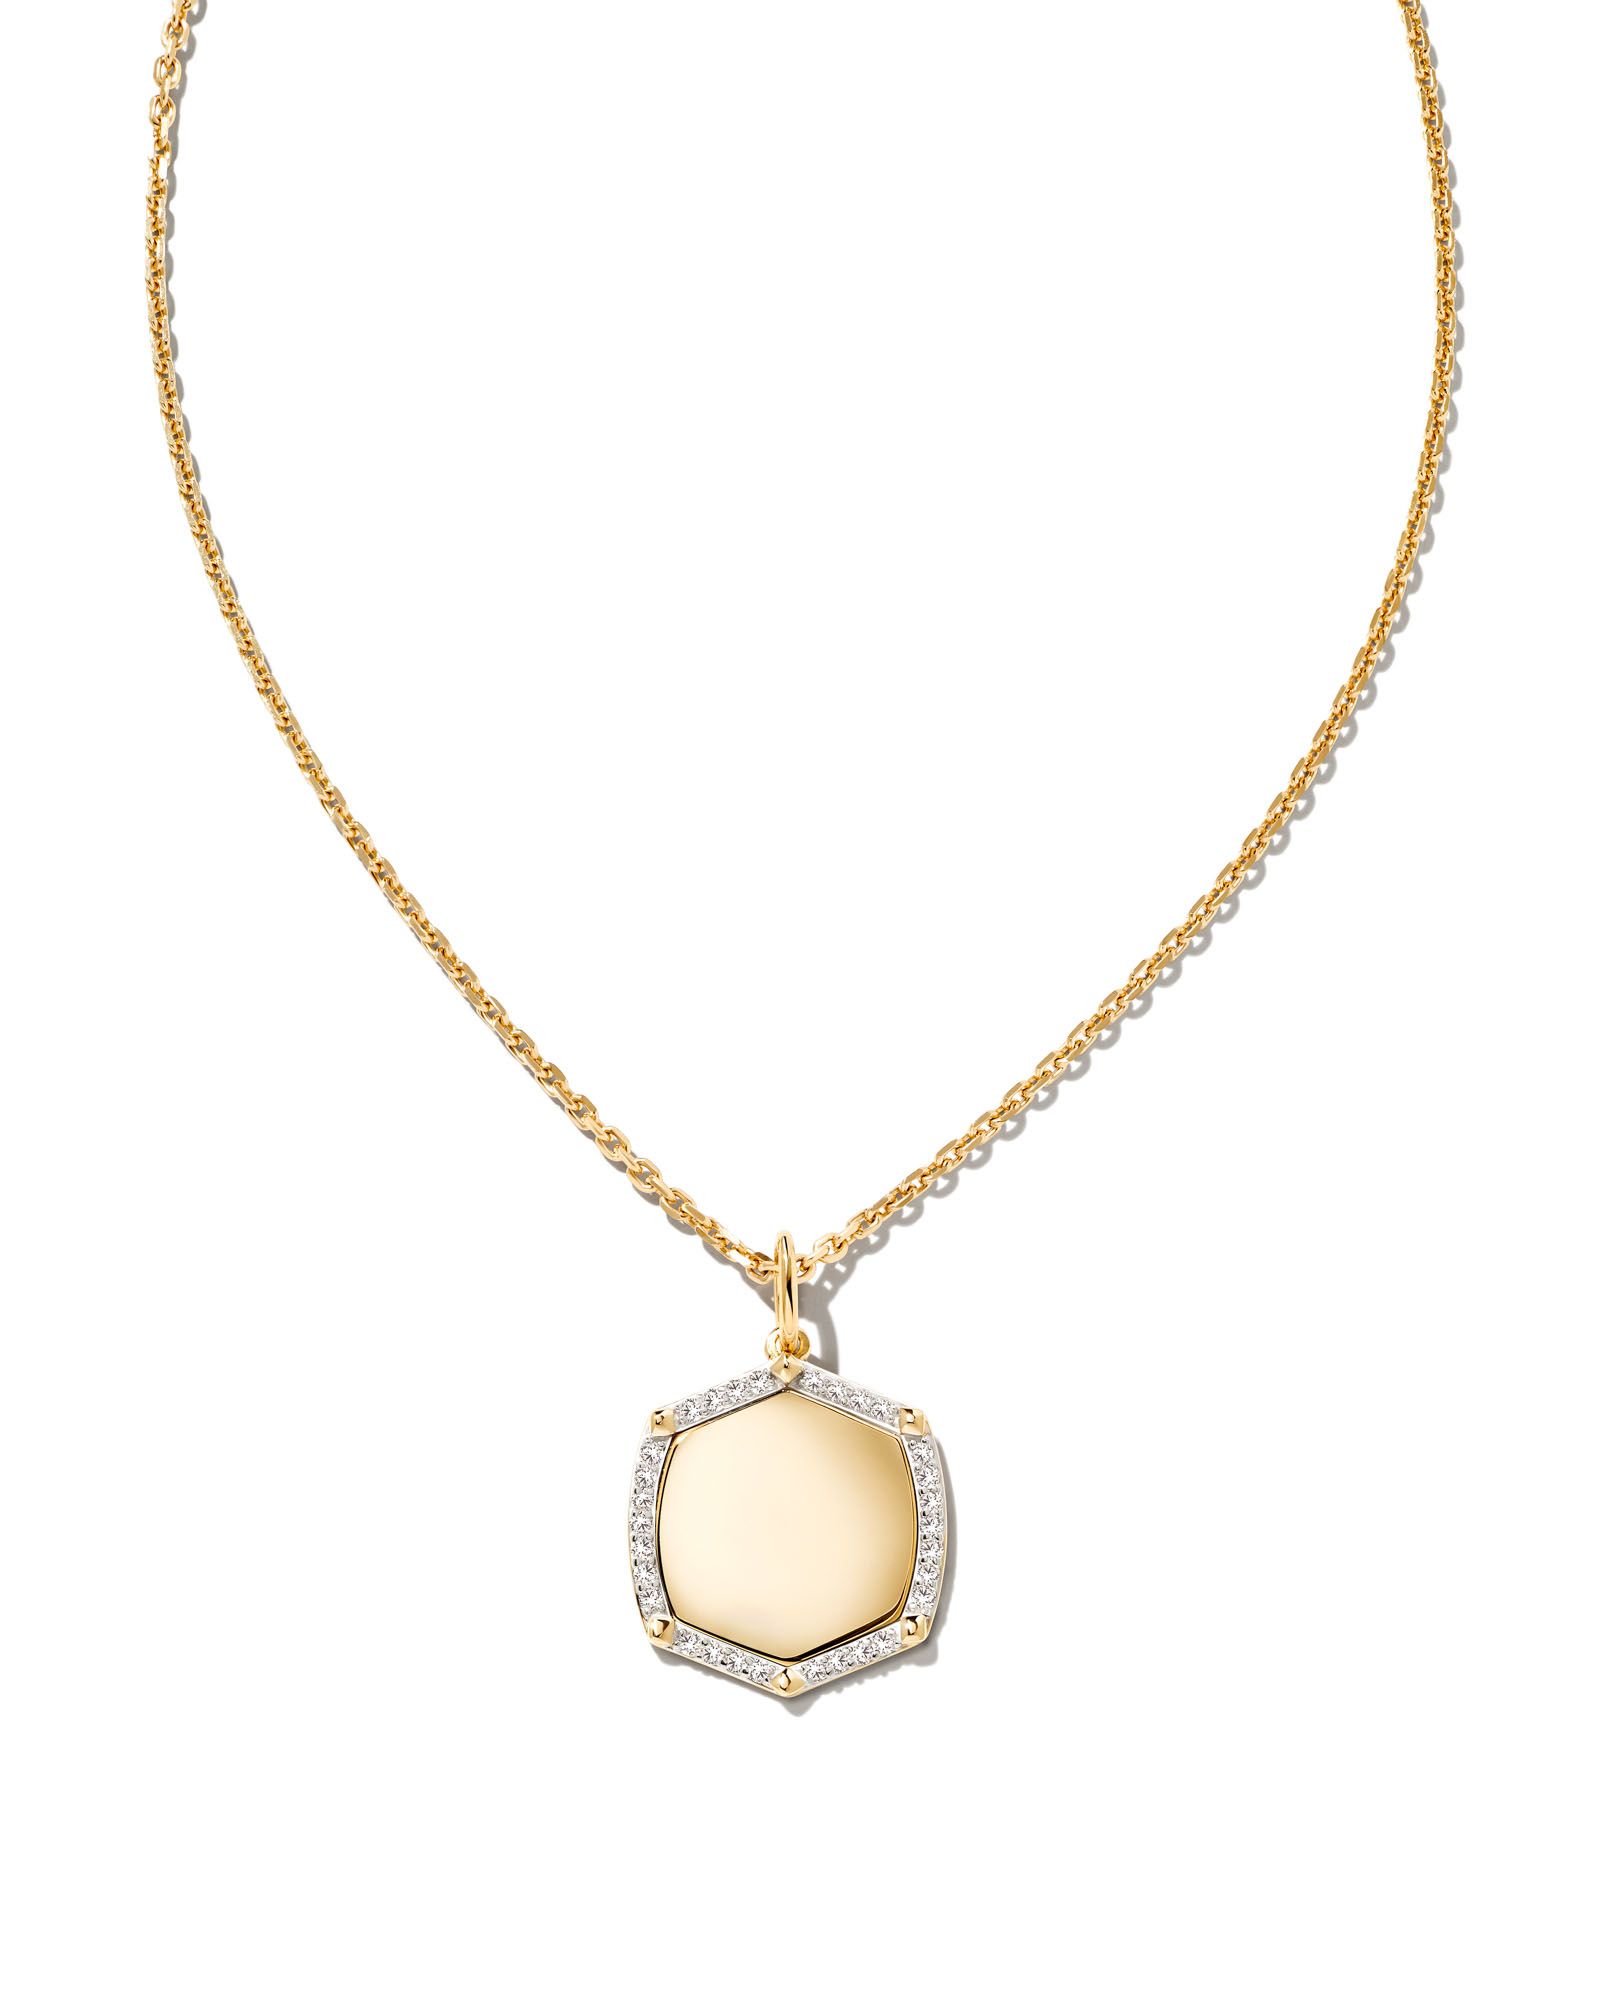 Davis 18k Gold Vermeil Luxe Charm Necklace in White Sapphire | Kendra Scott | Kendra Scott